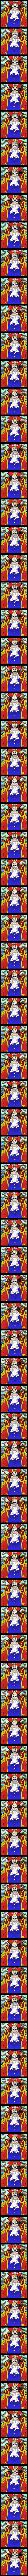 #71 - One Piece - Gol D Roger